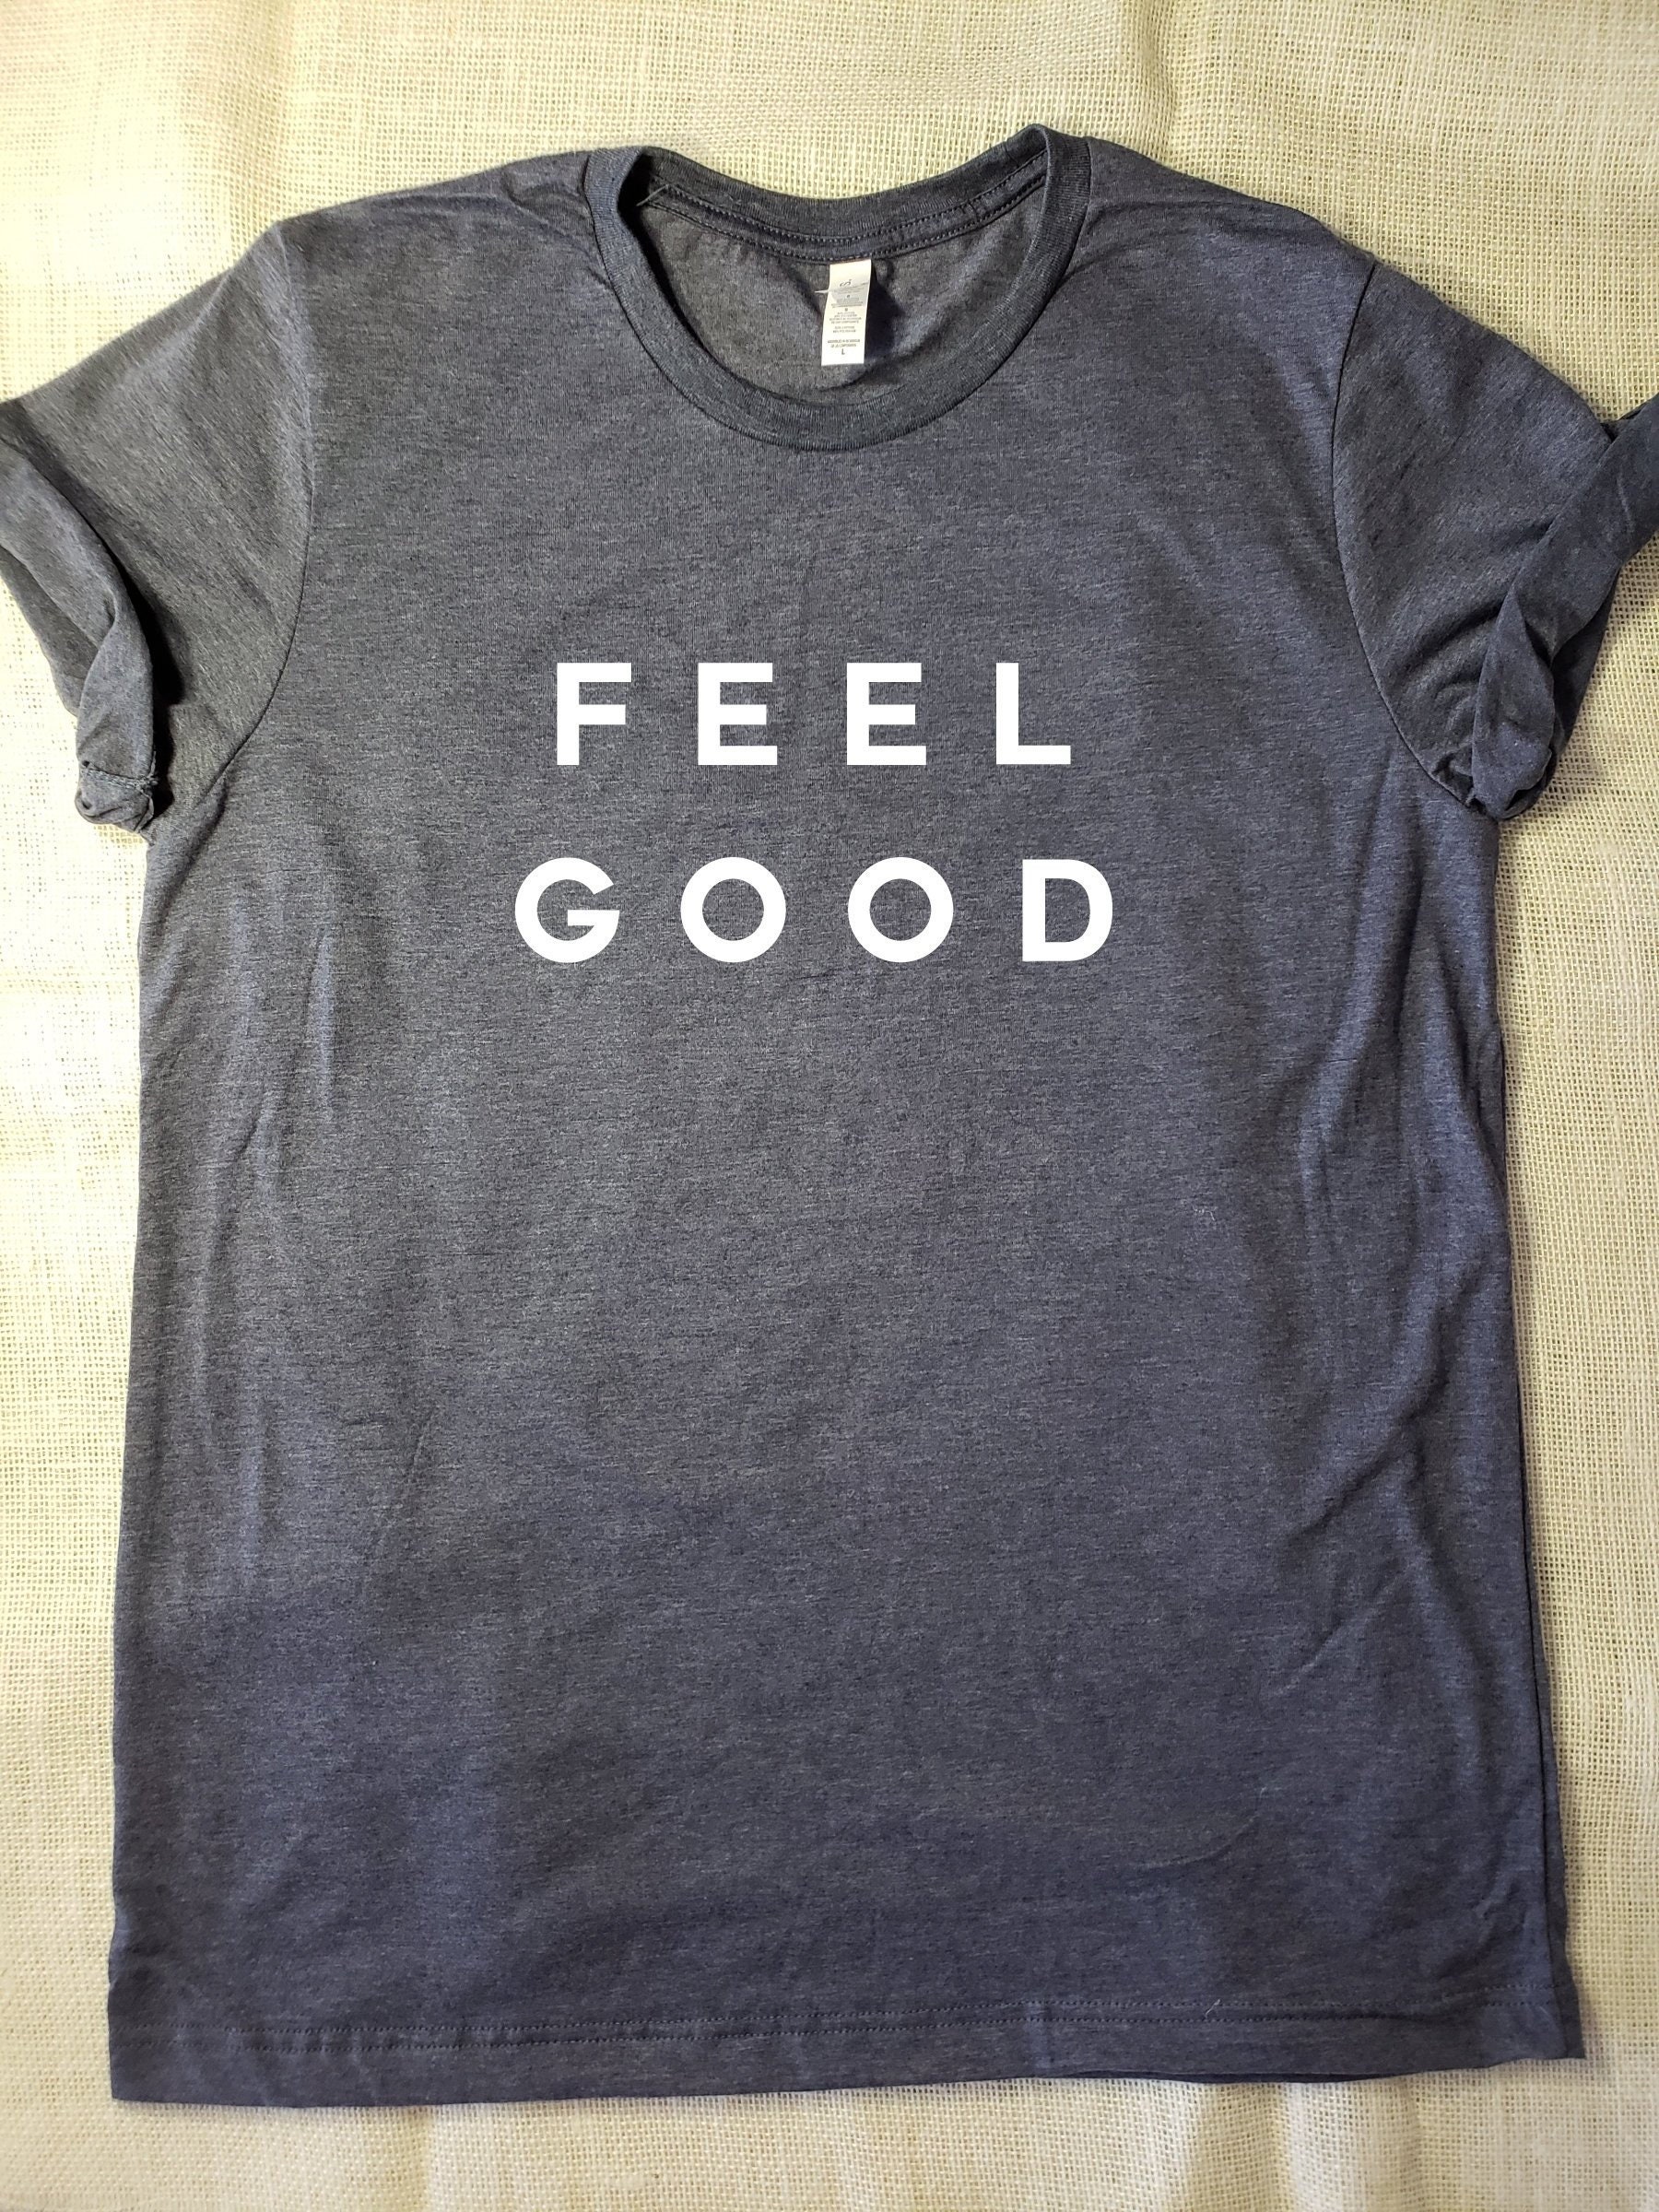 Feel Good T-Shirt Unisex Graphic Tee S M L XL Style Shirt | Etsy